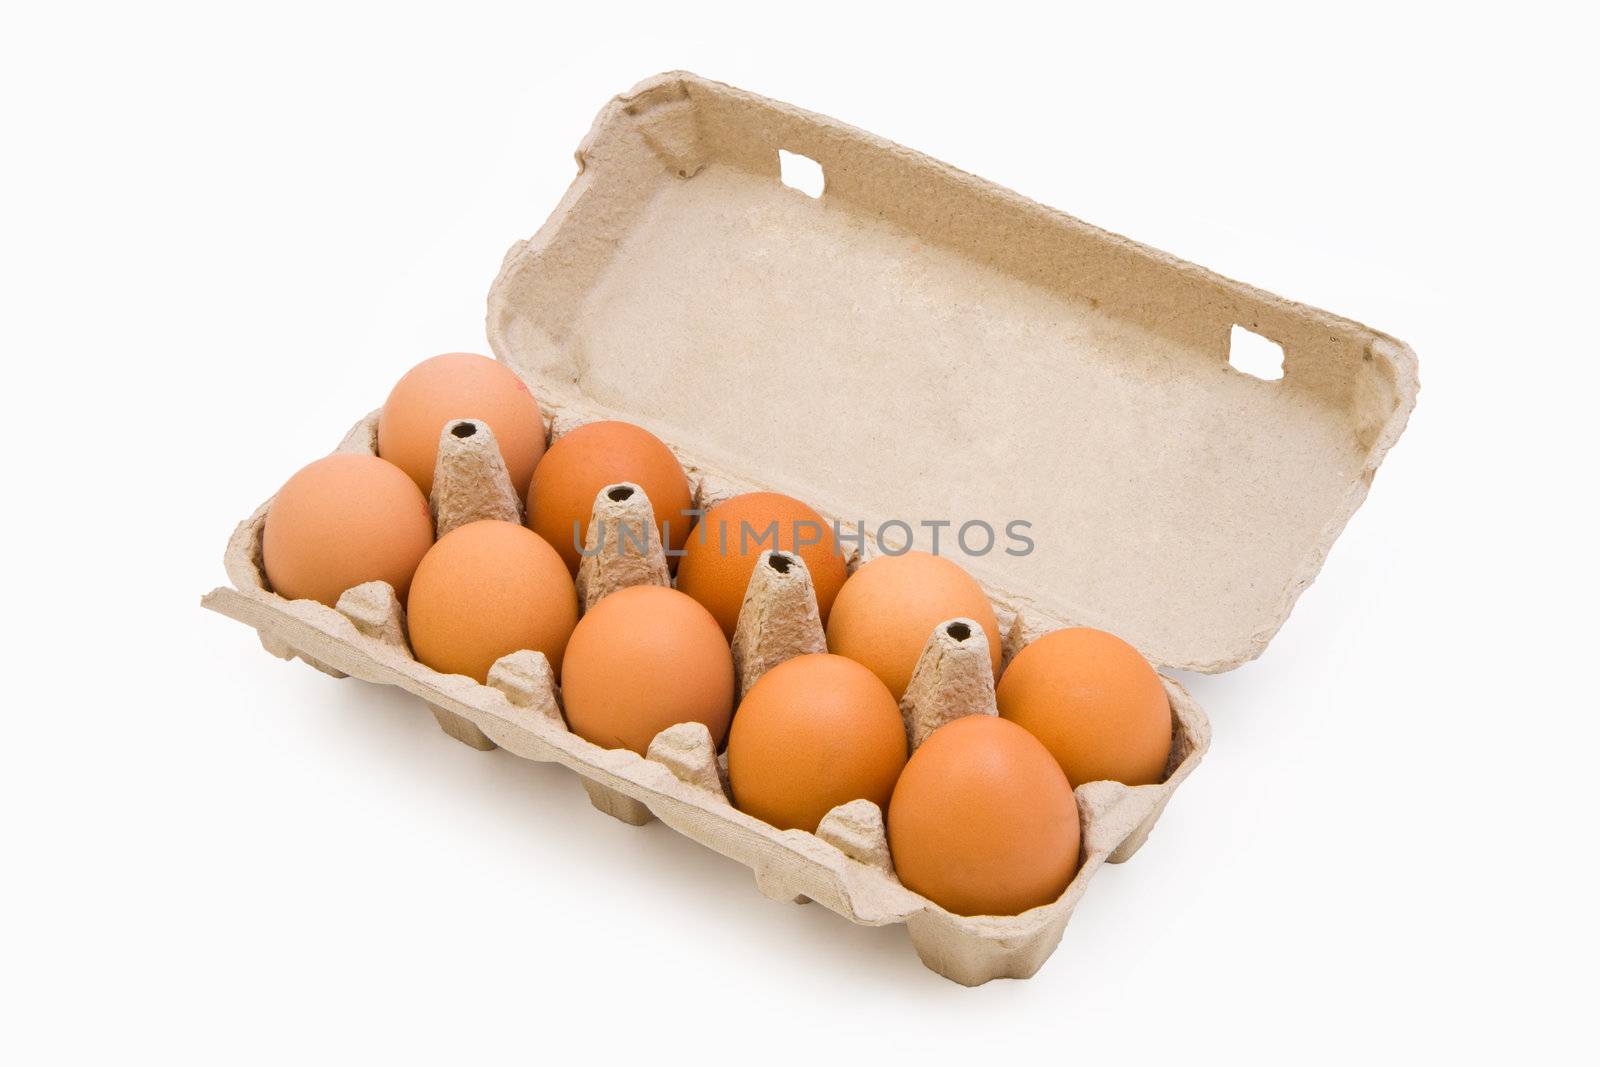 Eggs in a carton box by Gbuglok